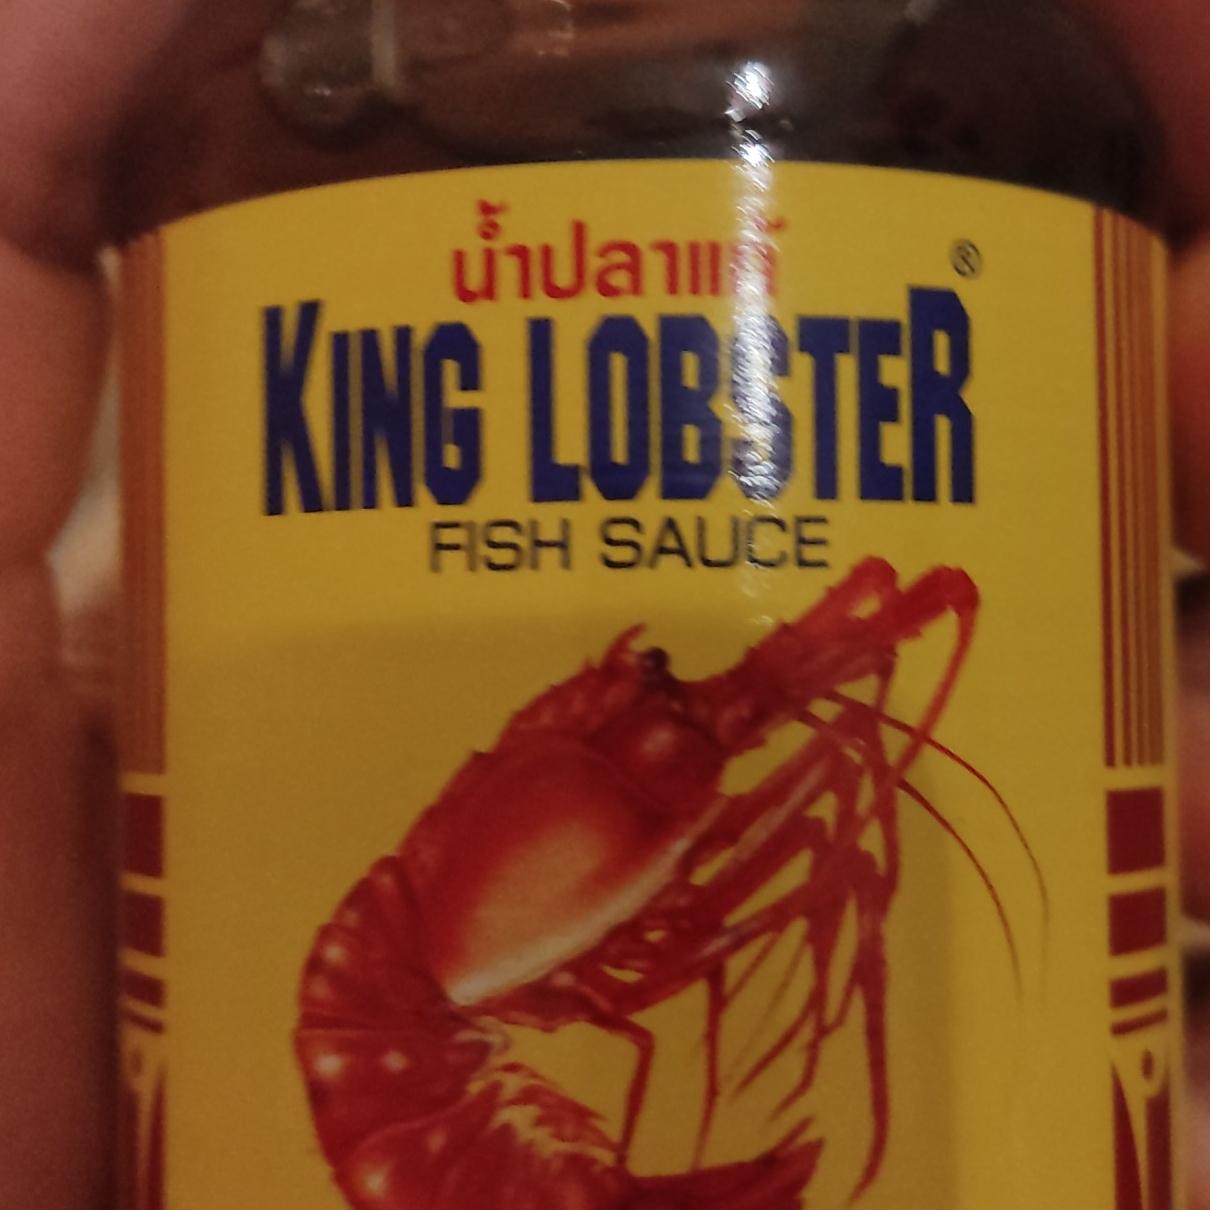 Fotografie - King Lobster Fish Sauce